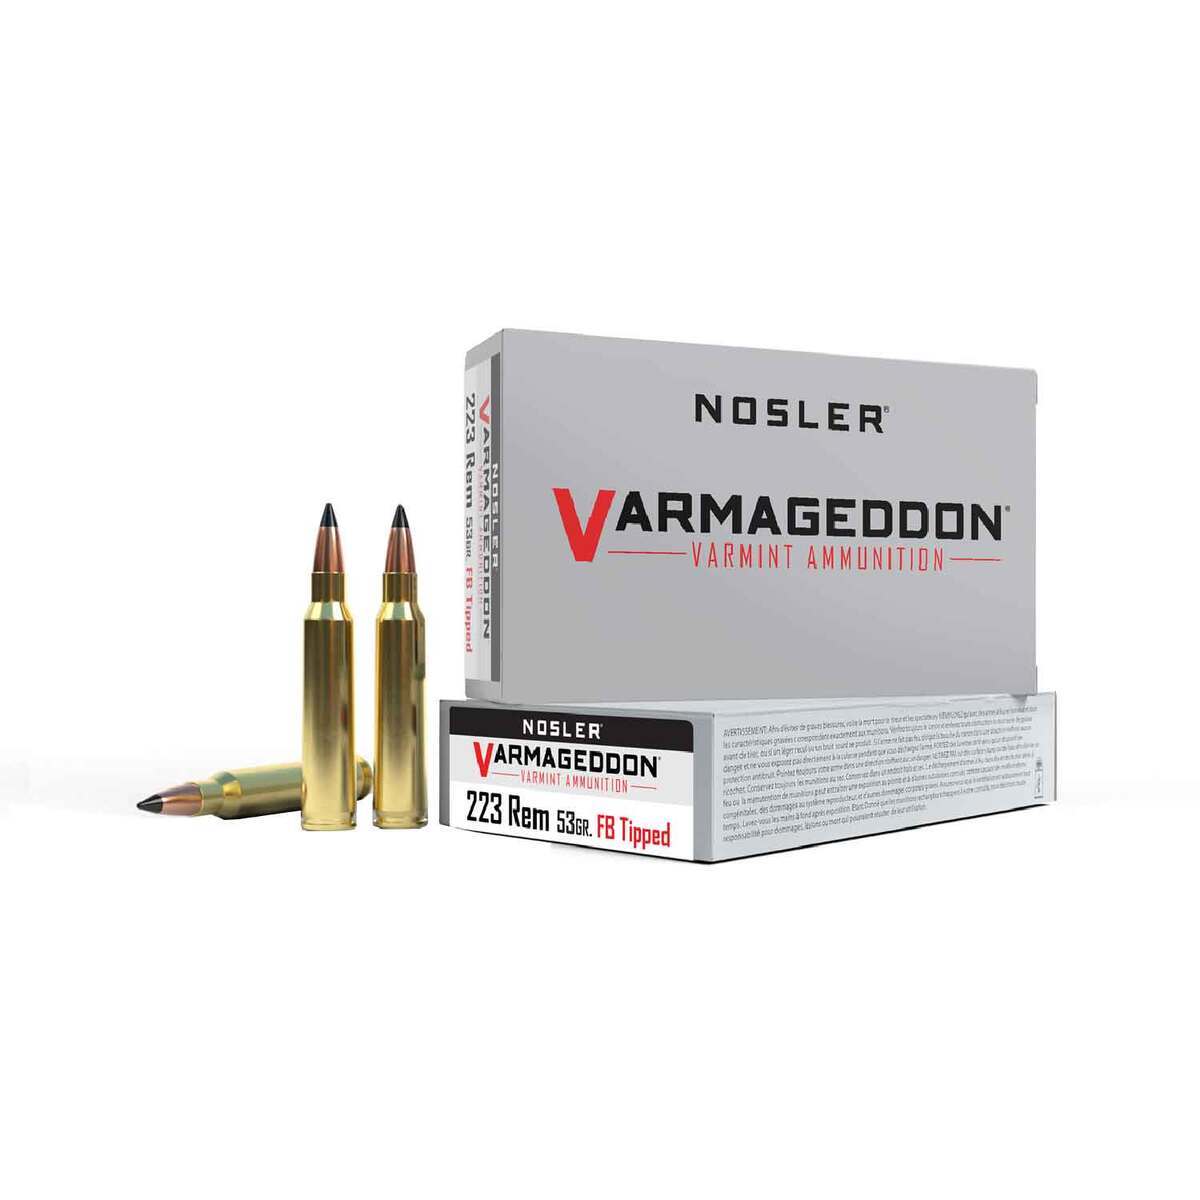 Shop 223 Remington Ammo at the Best Price - Defender Ammunition